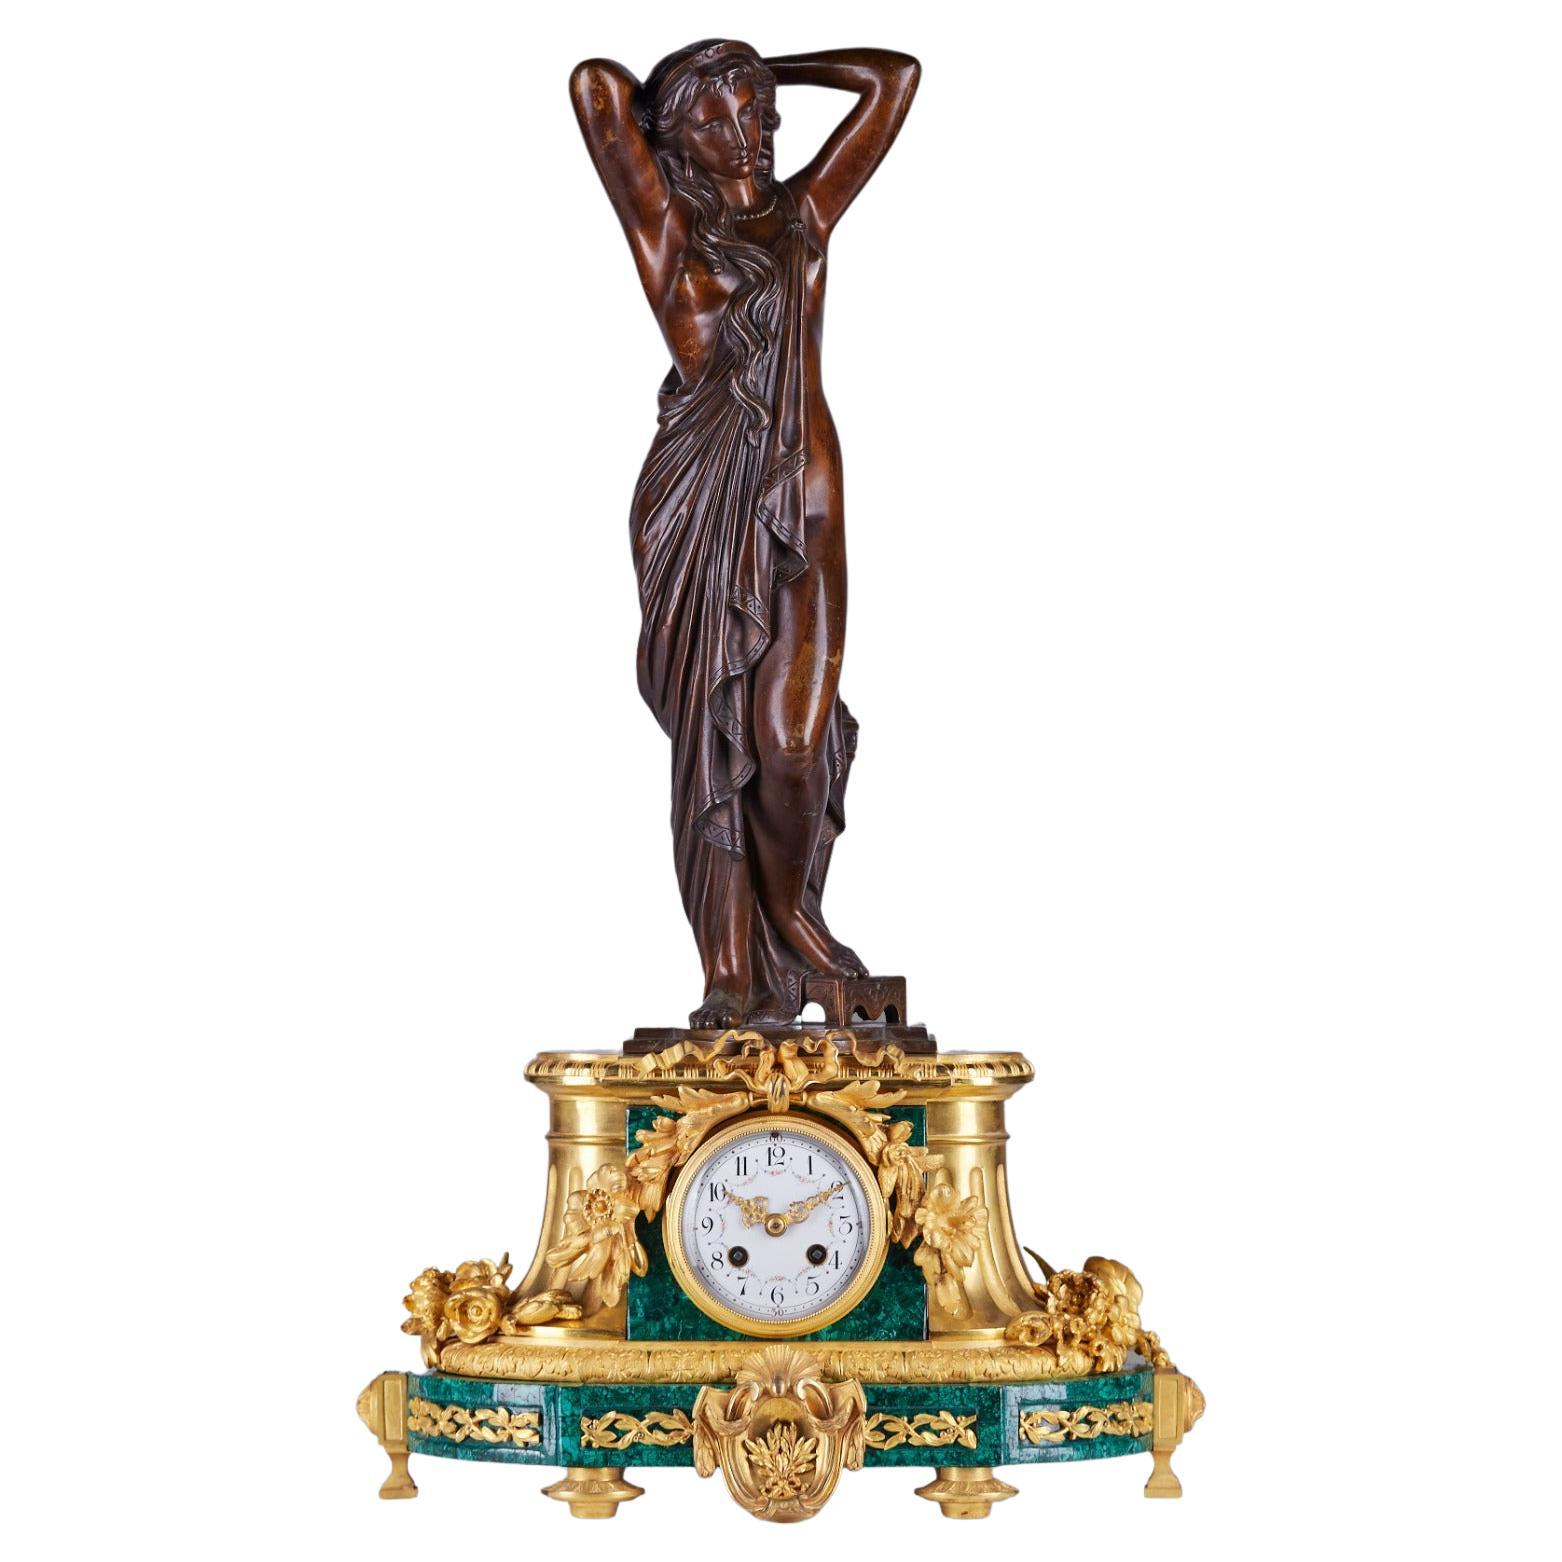 Horloge de bureau de style Louis XVI du Xixe siècle incrustée de malachite